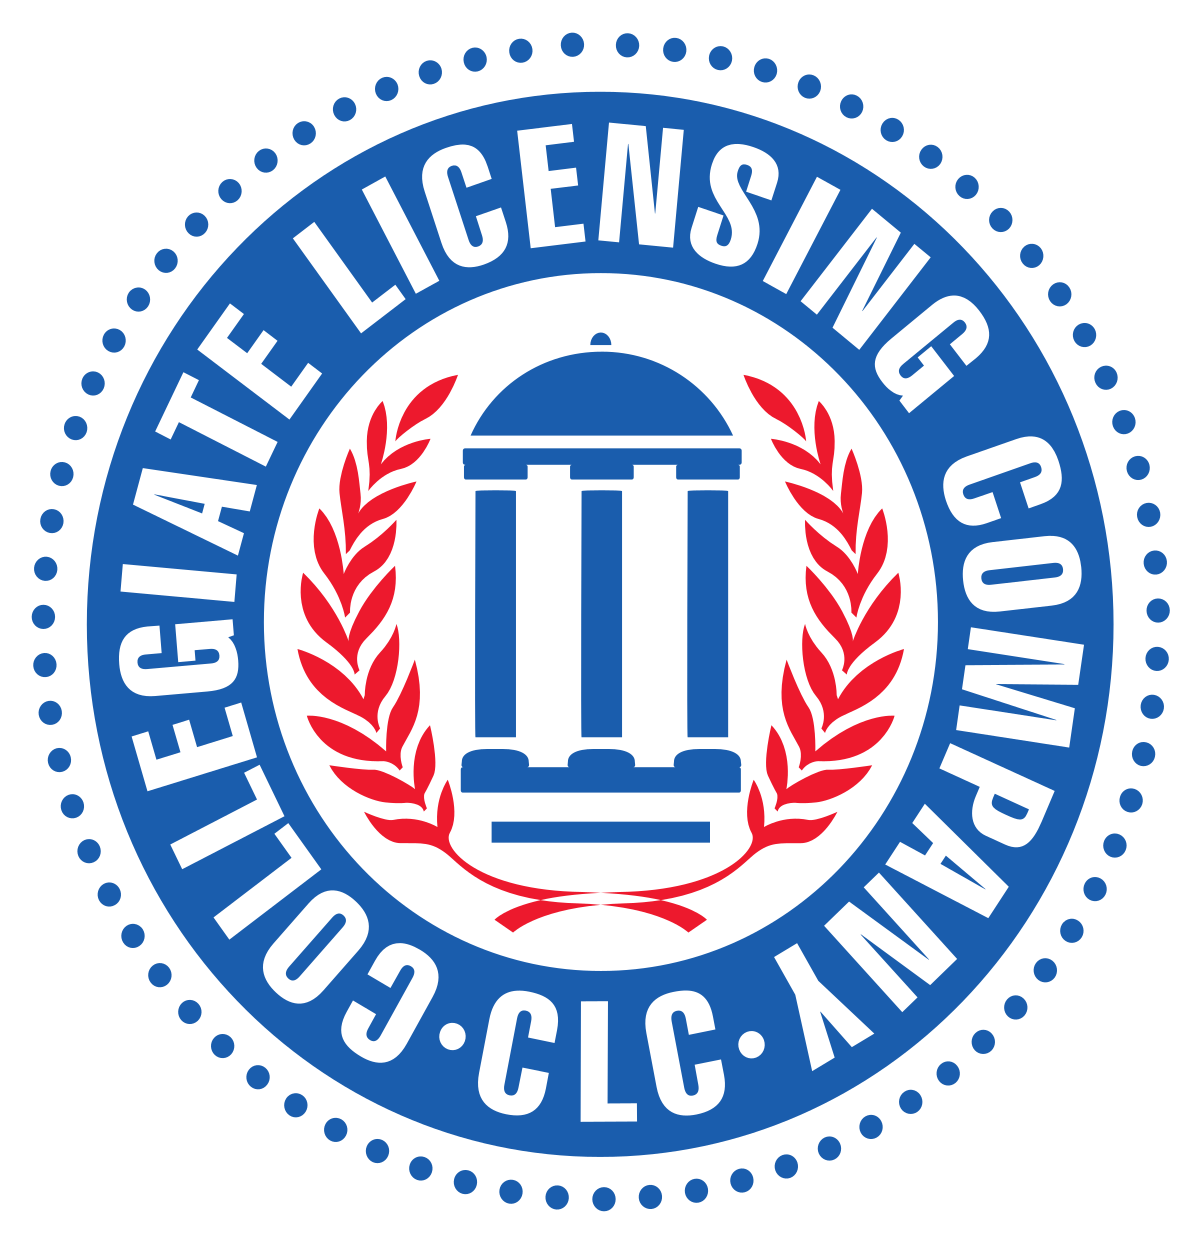 Collegiate_Licensing_Company_logo.svg.png